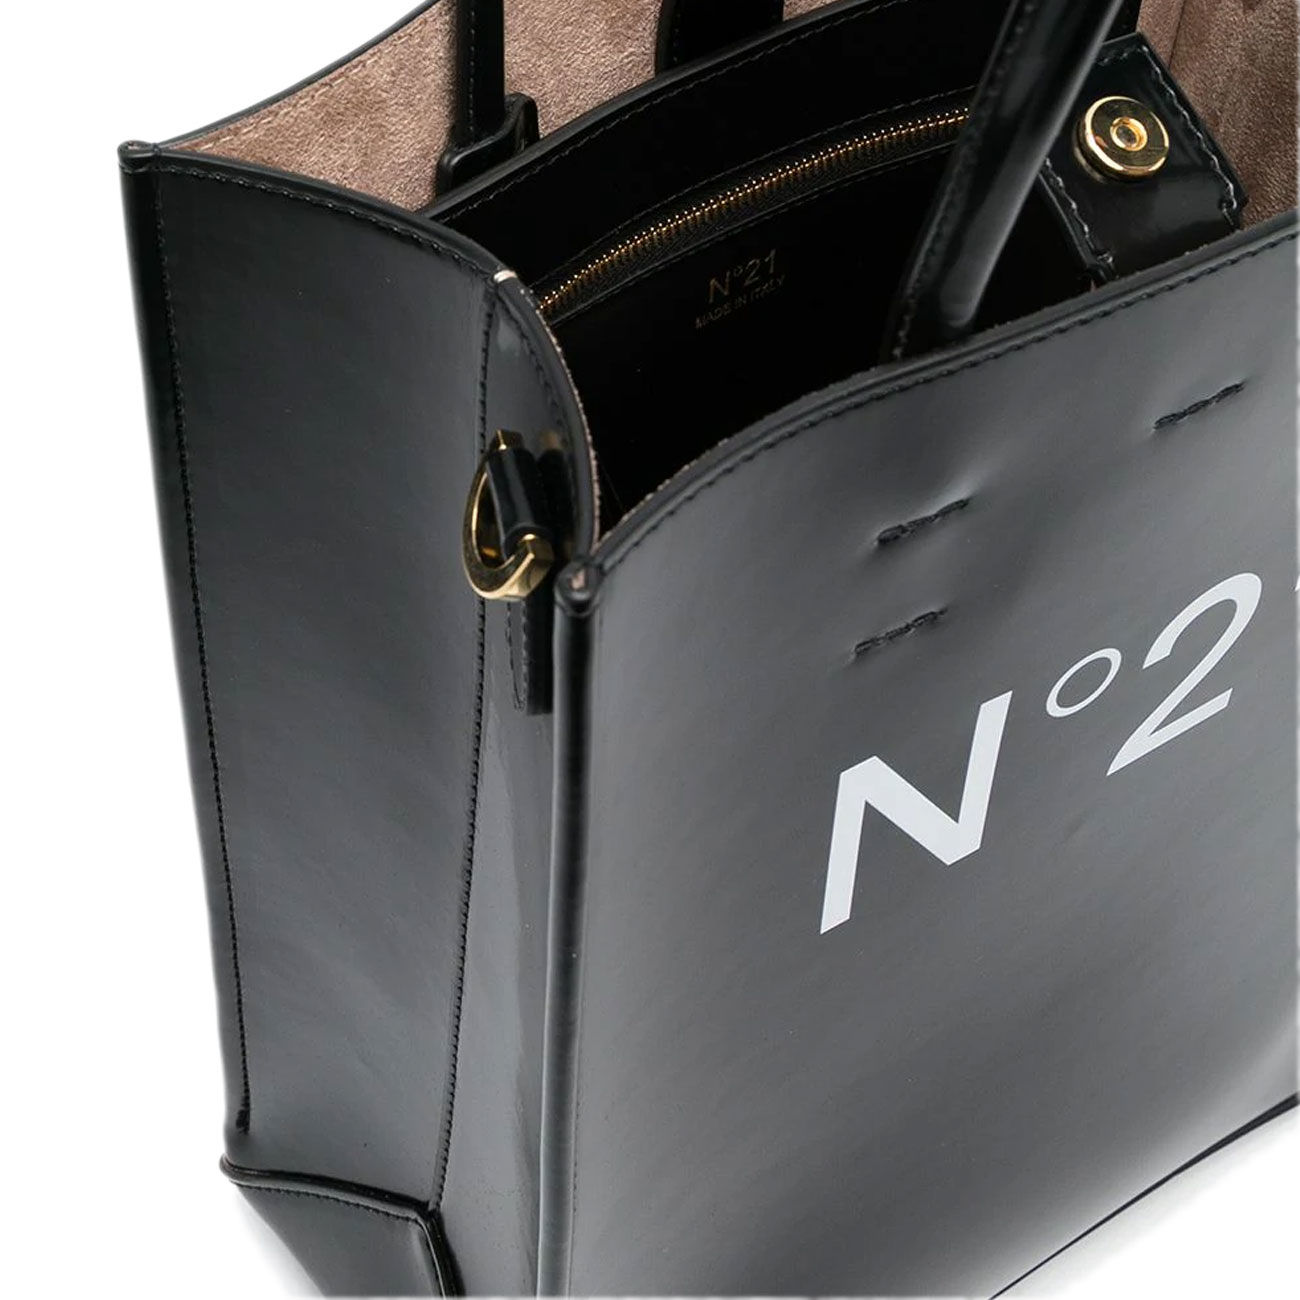 N° 21: mini bag for woman - Black